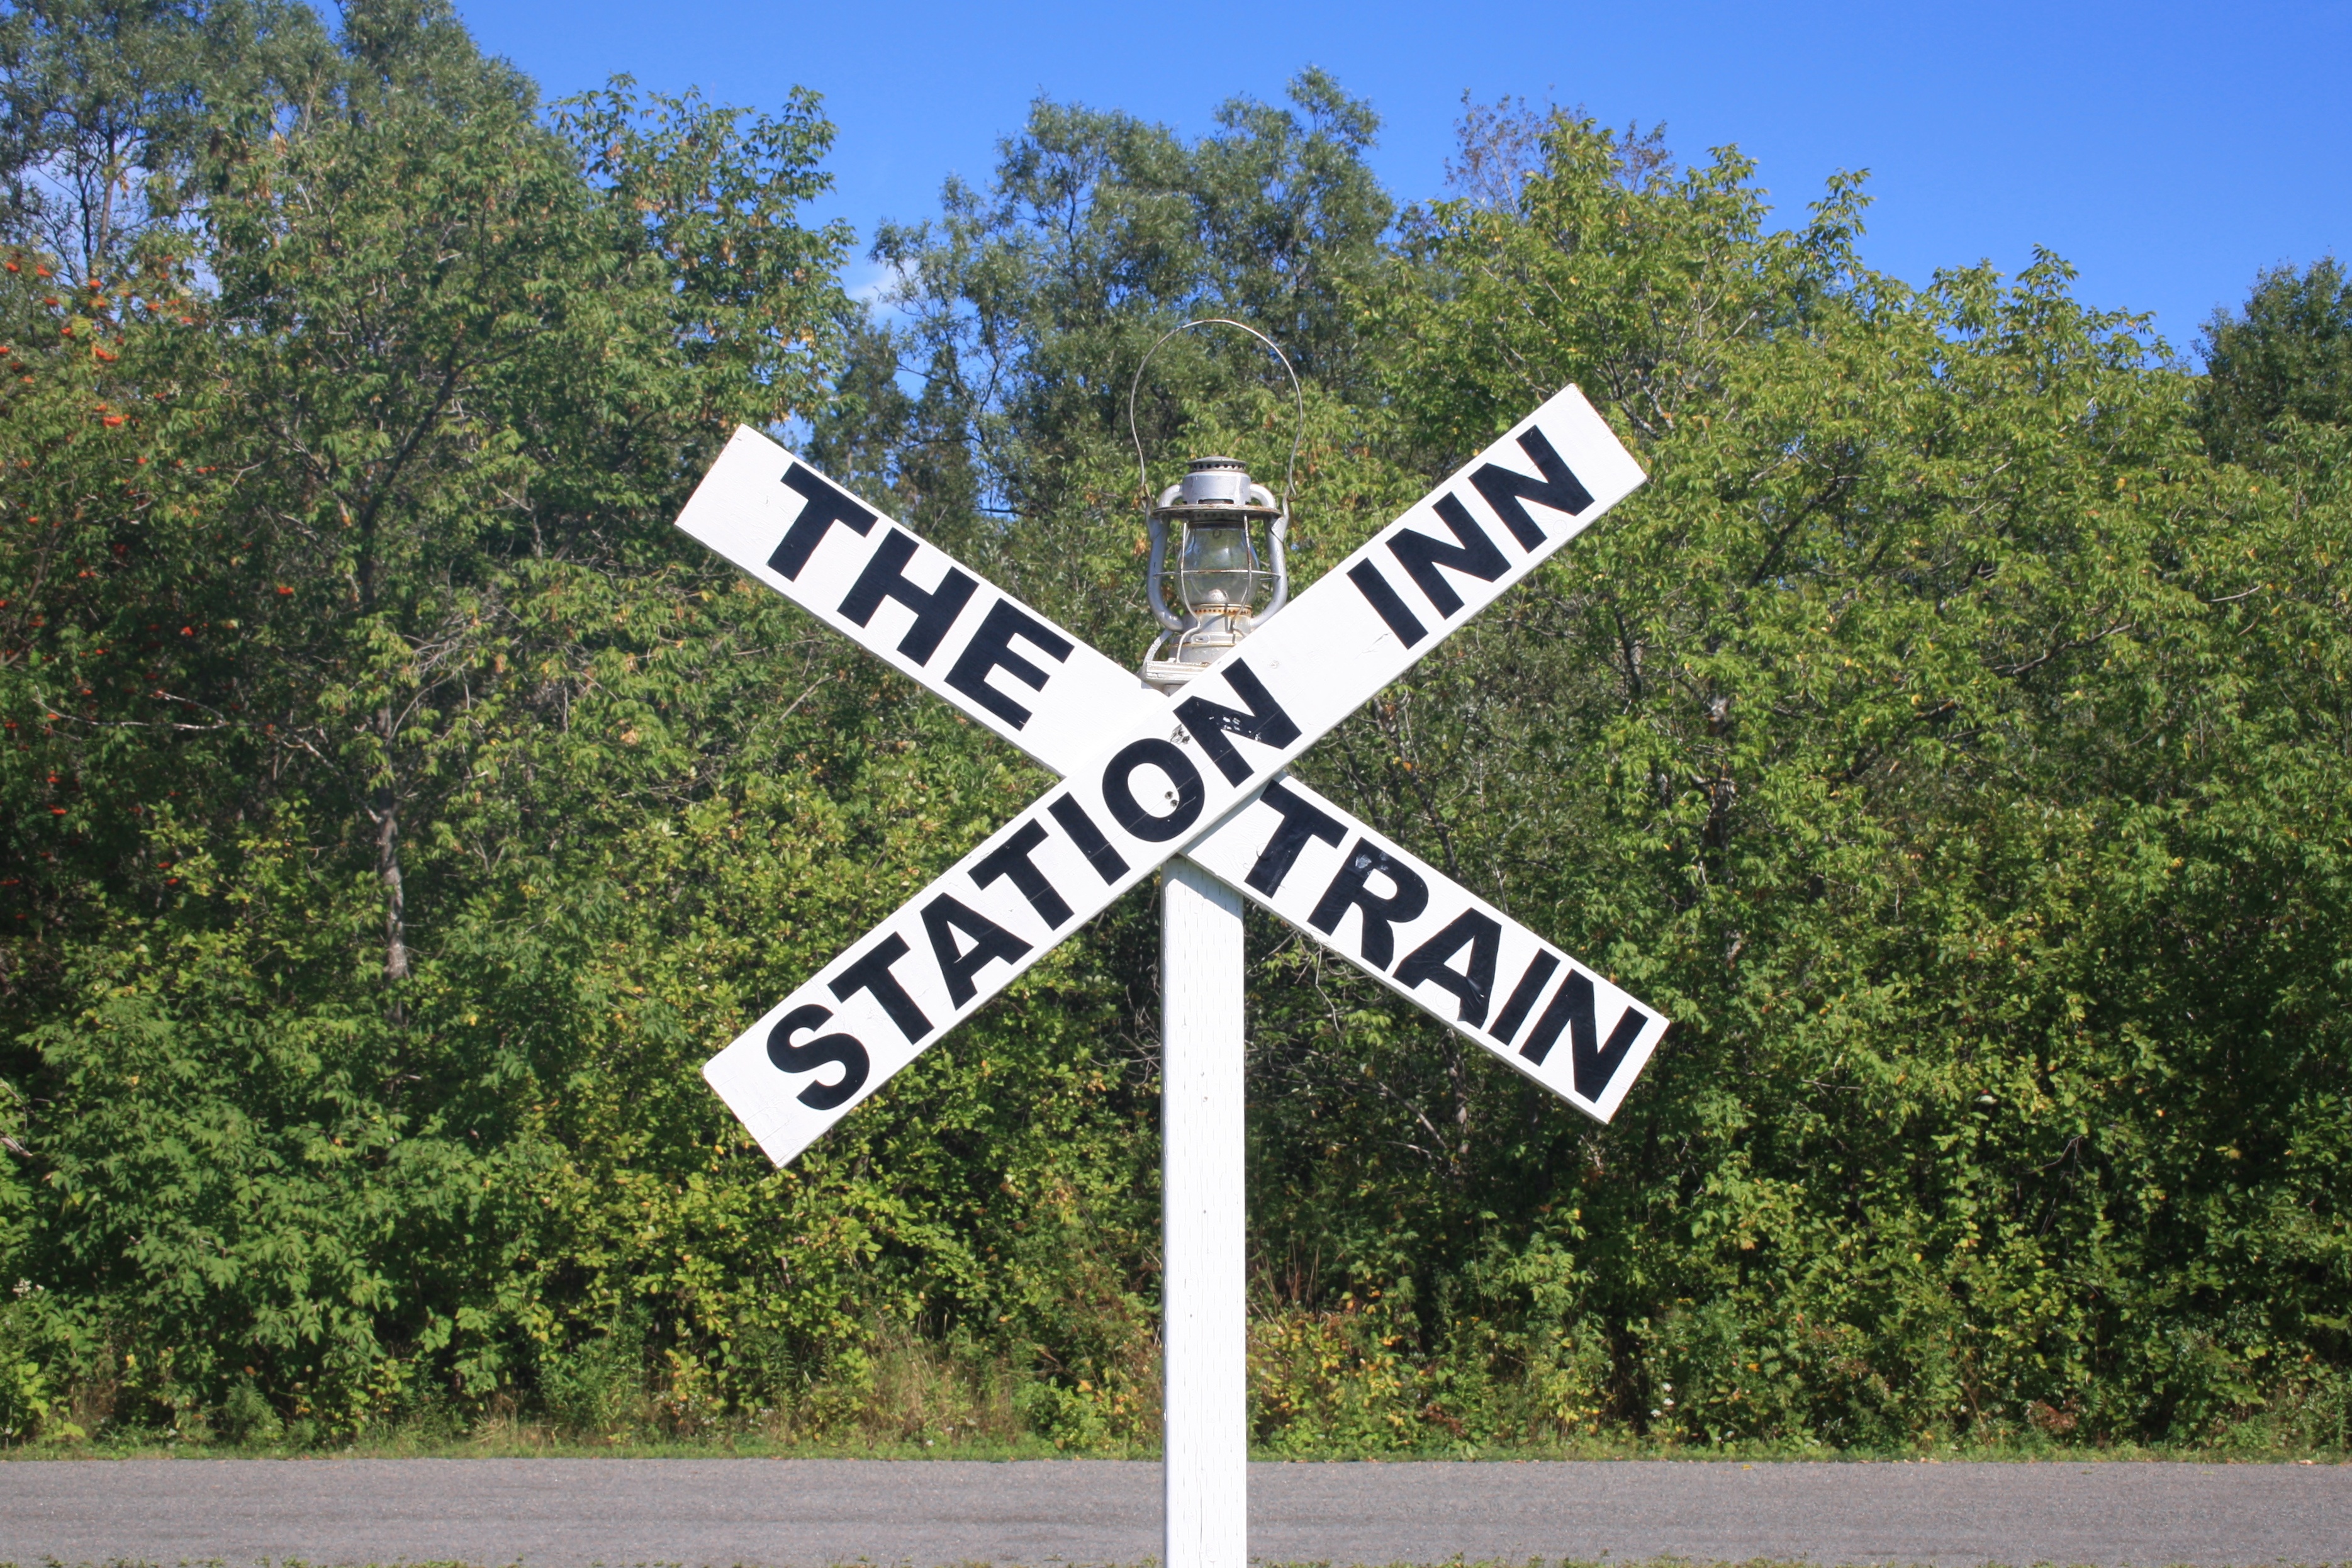 The Train Station Inn sign